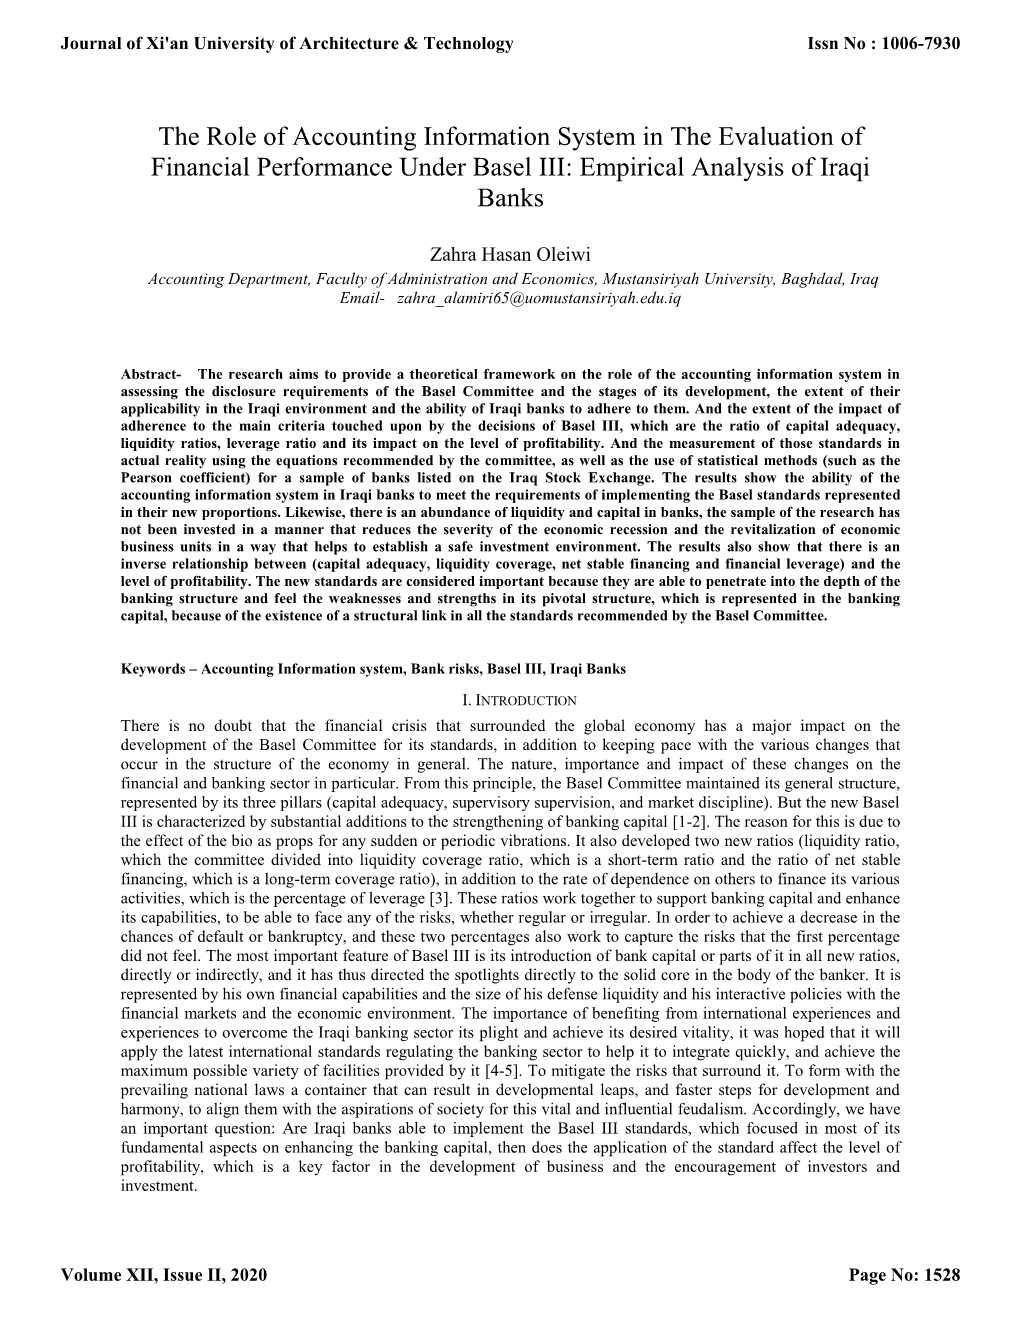 Empirical Analysis of Iraqi Banks